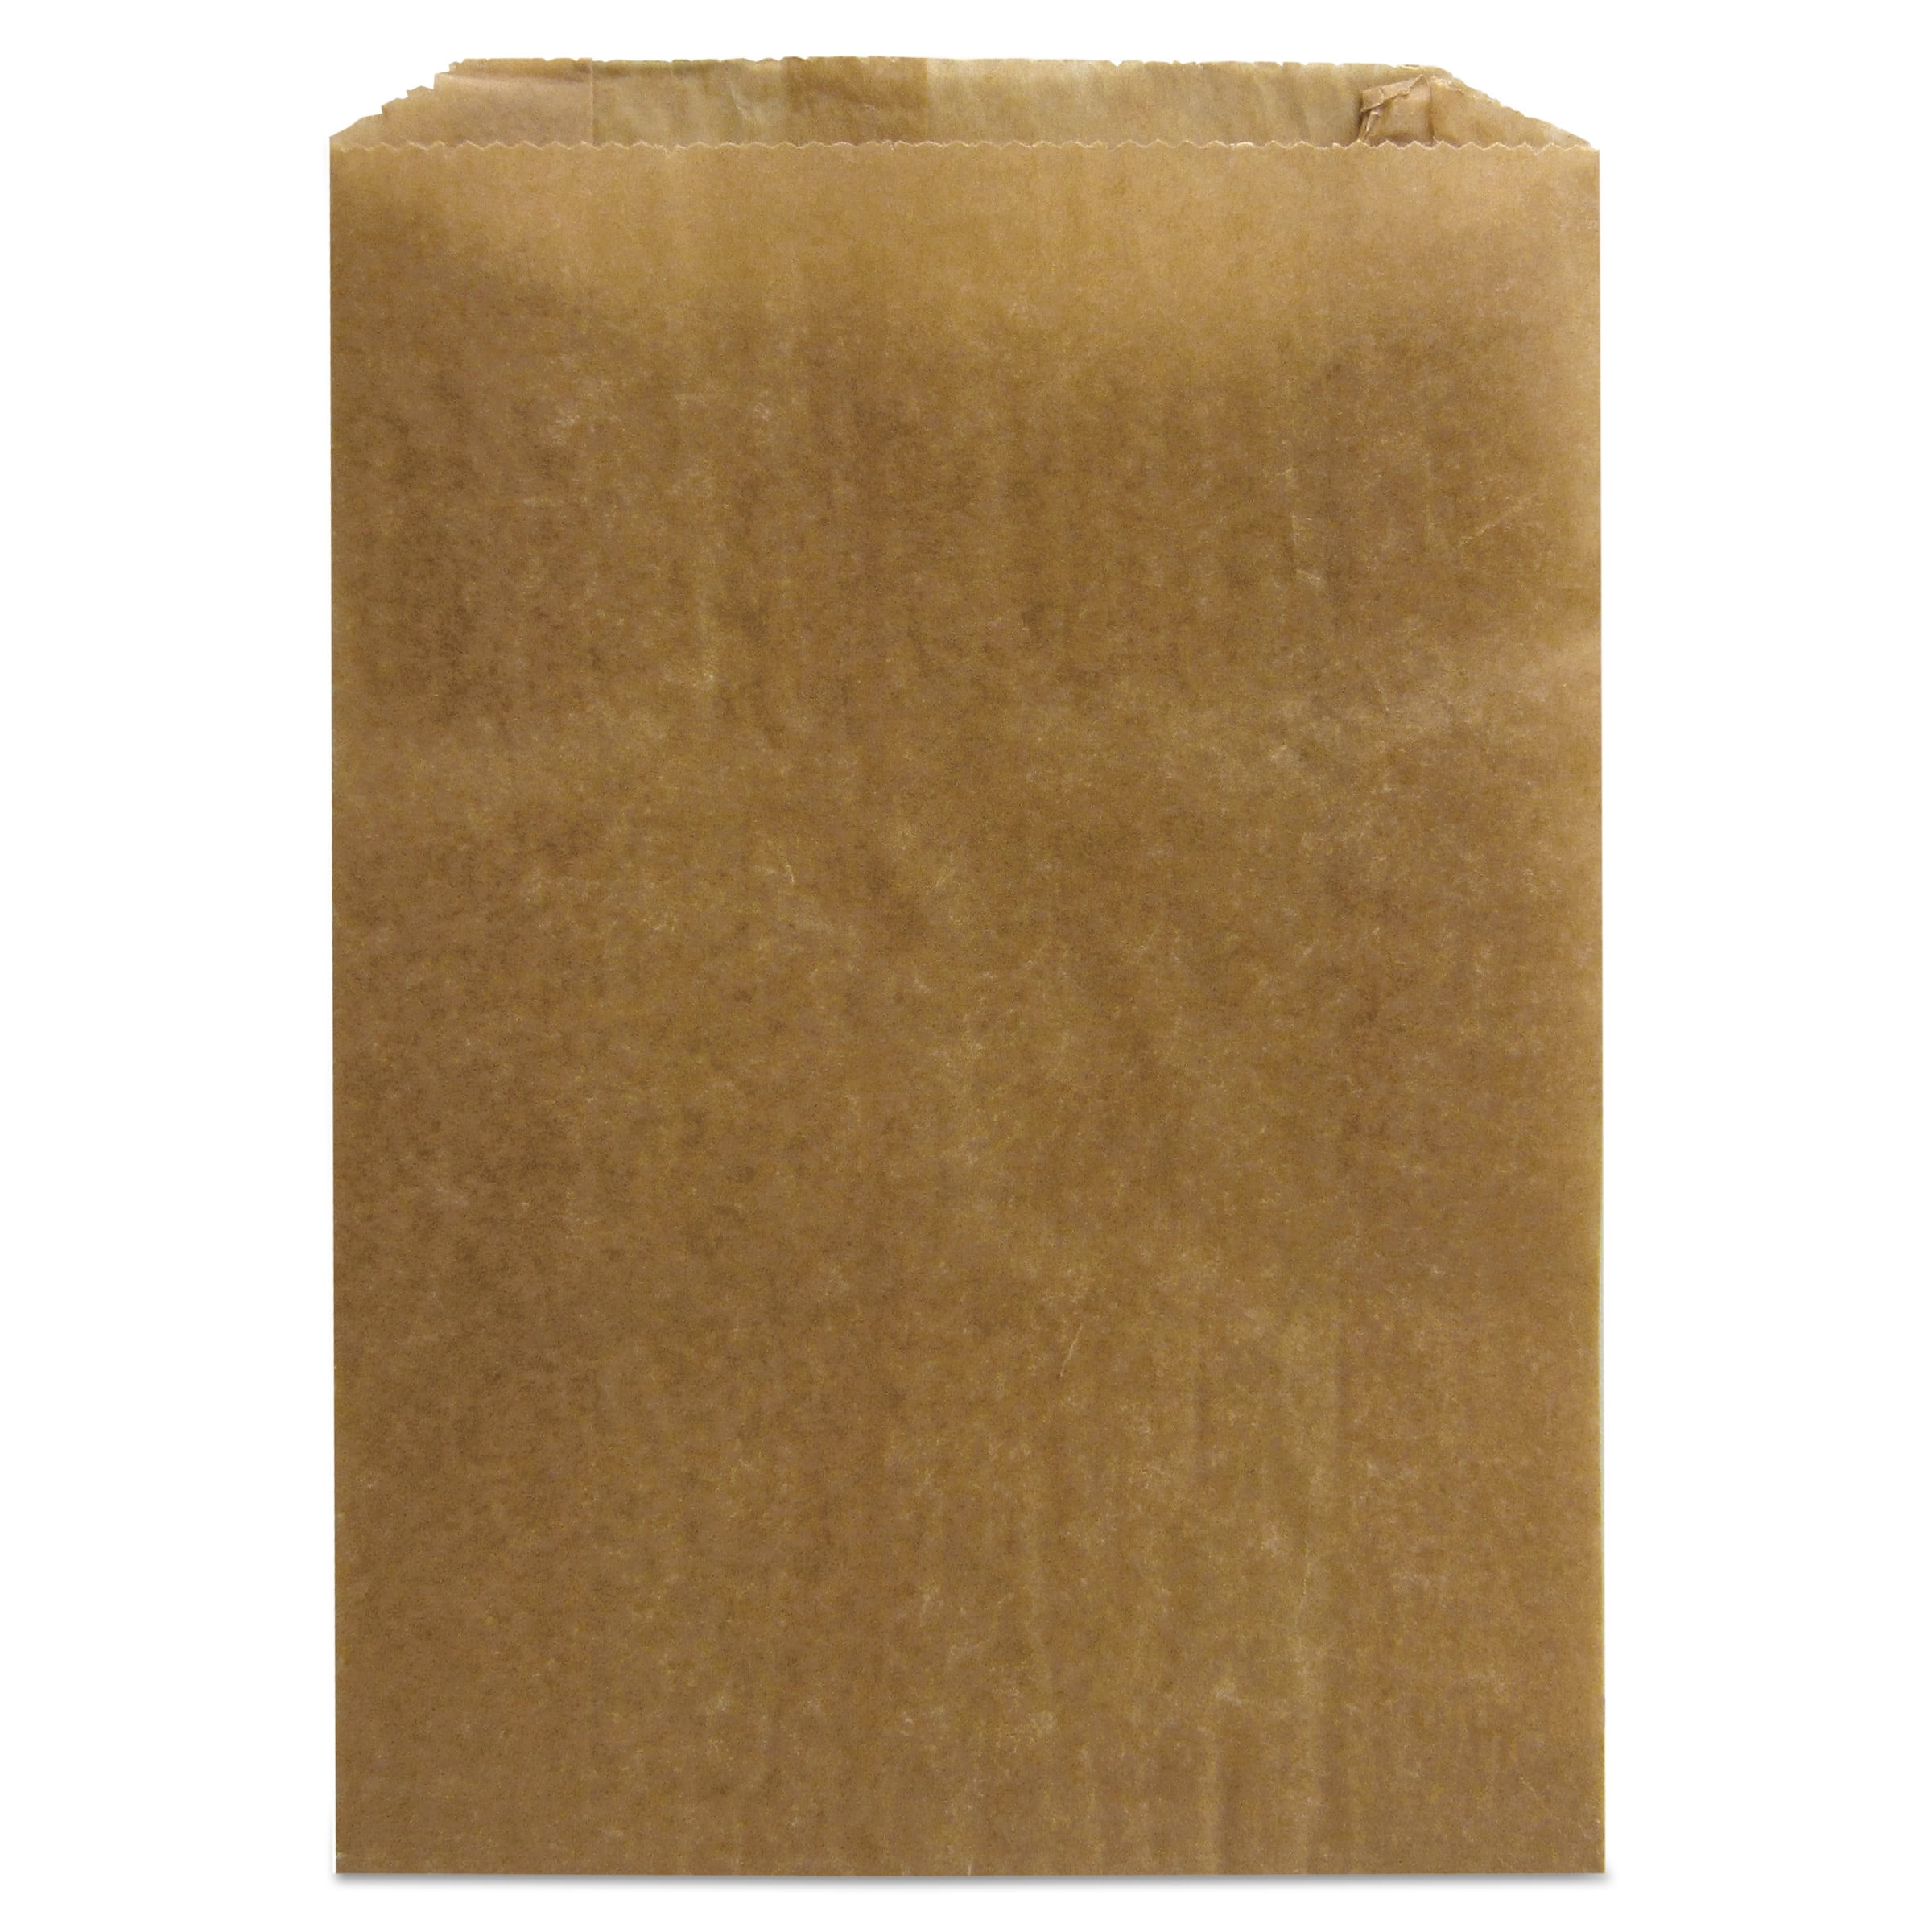 KL Wax Paper Bags Tampon Bags Hospeco KL Bags KL260 Hospeco Wax Paper Bags  HOSKL HOS260 Waxed Paper Bags